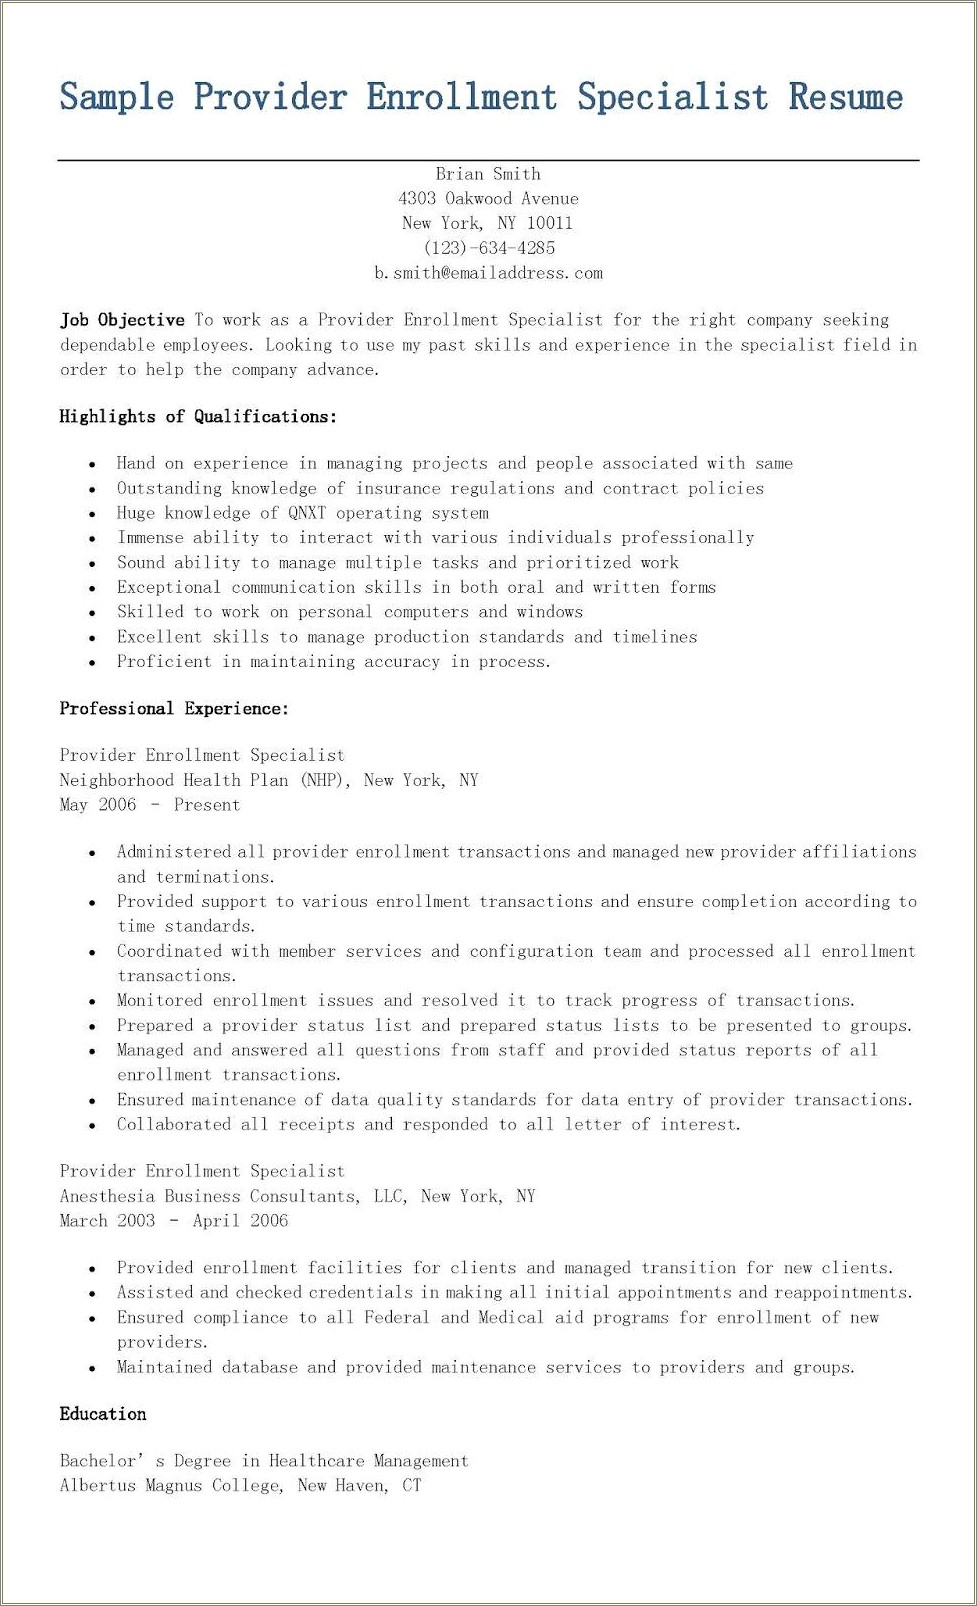 Sample Resume For Provider Enrollment Specialist